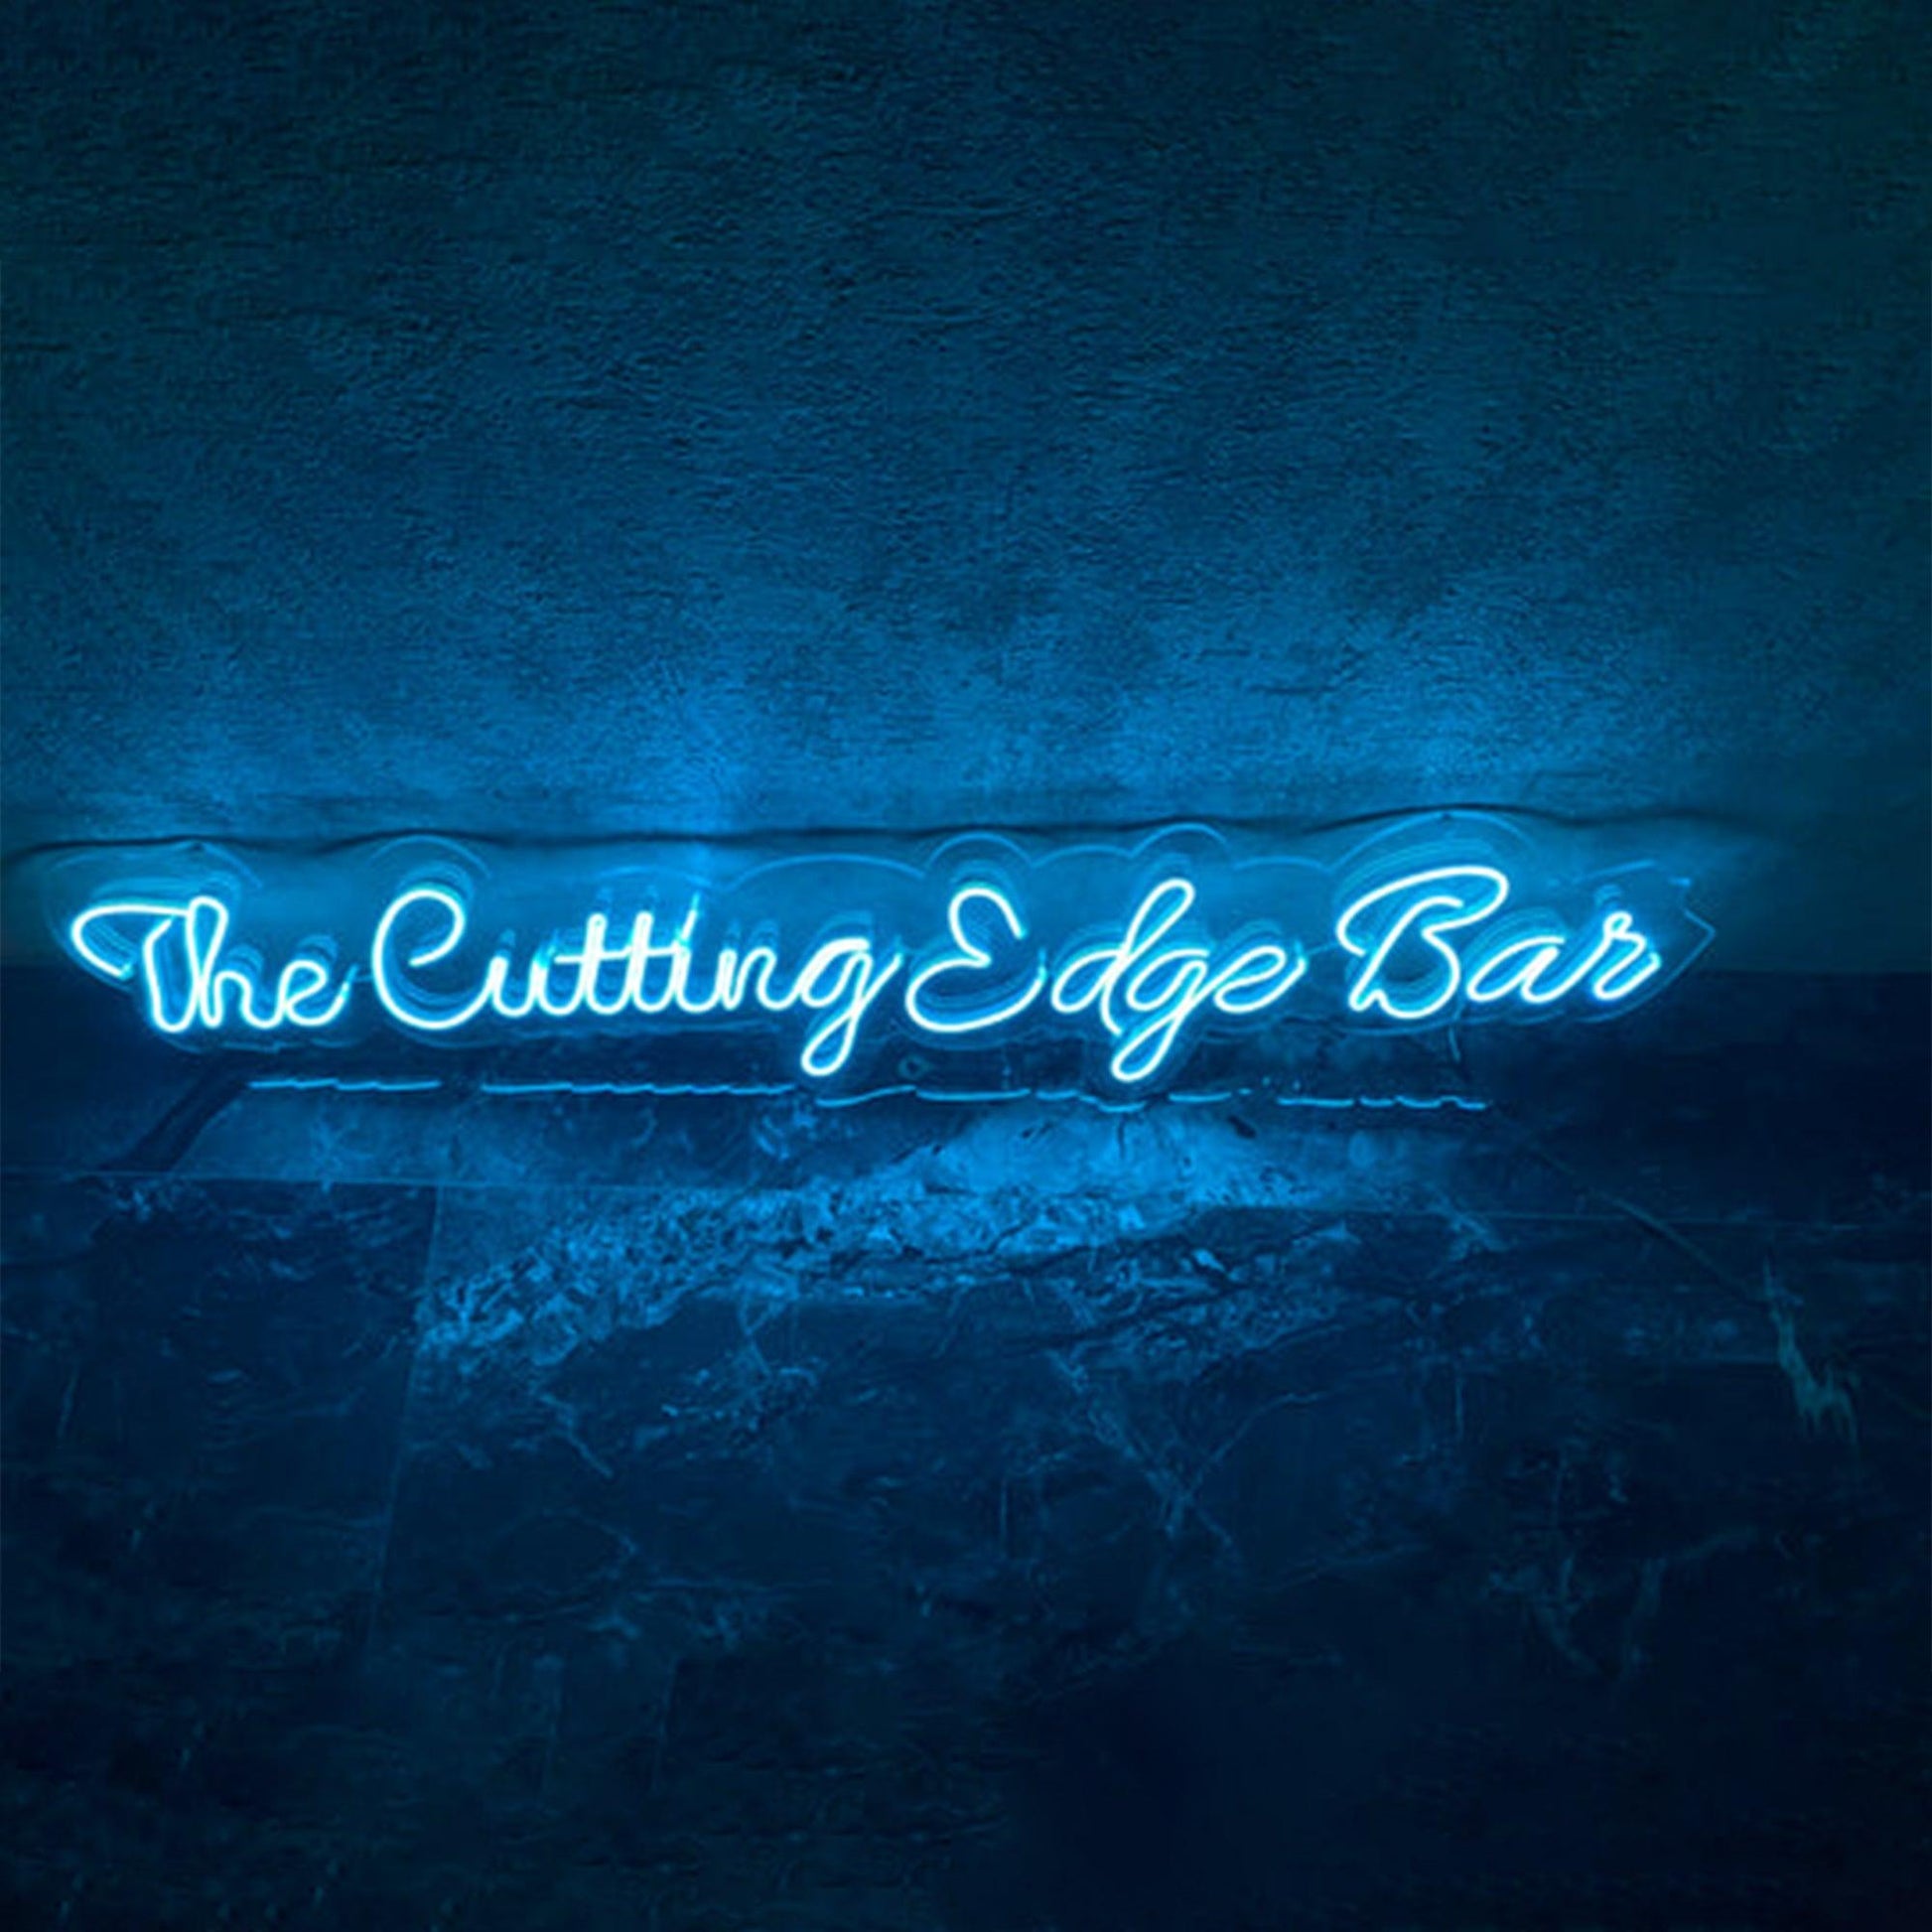 the-cutting-edge-bar-neon-sign